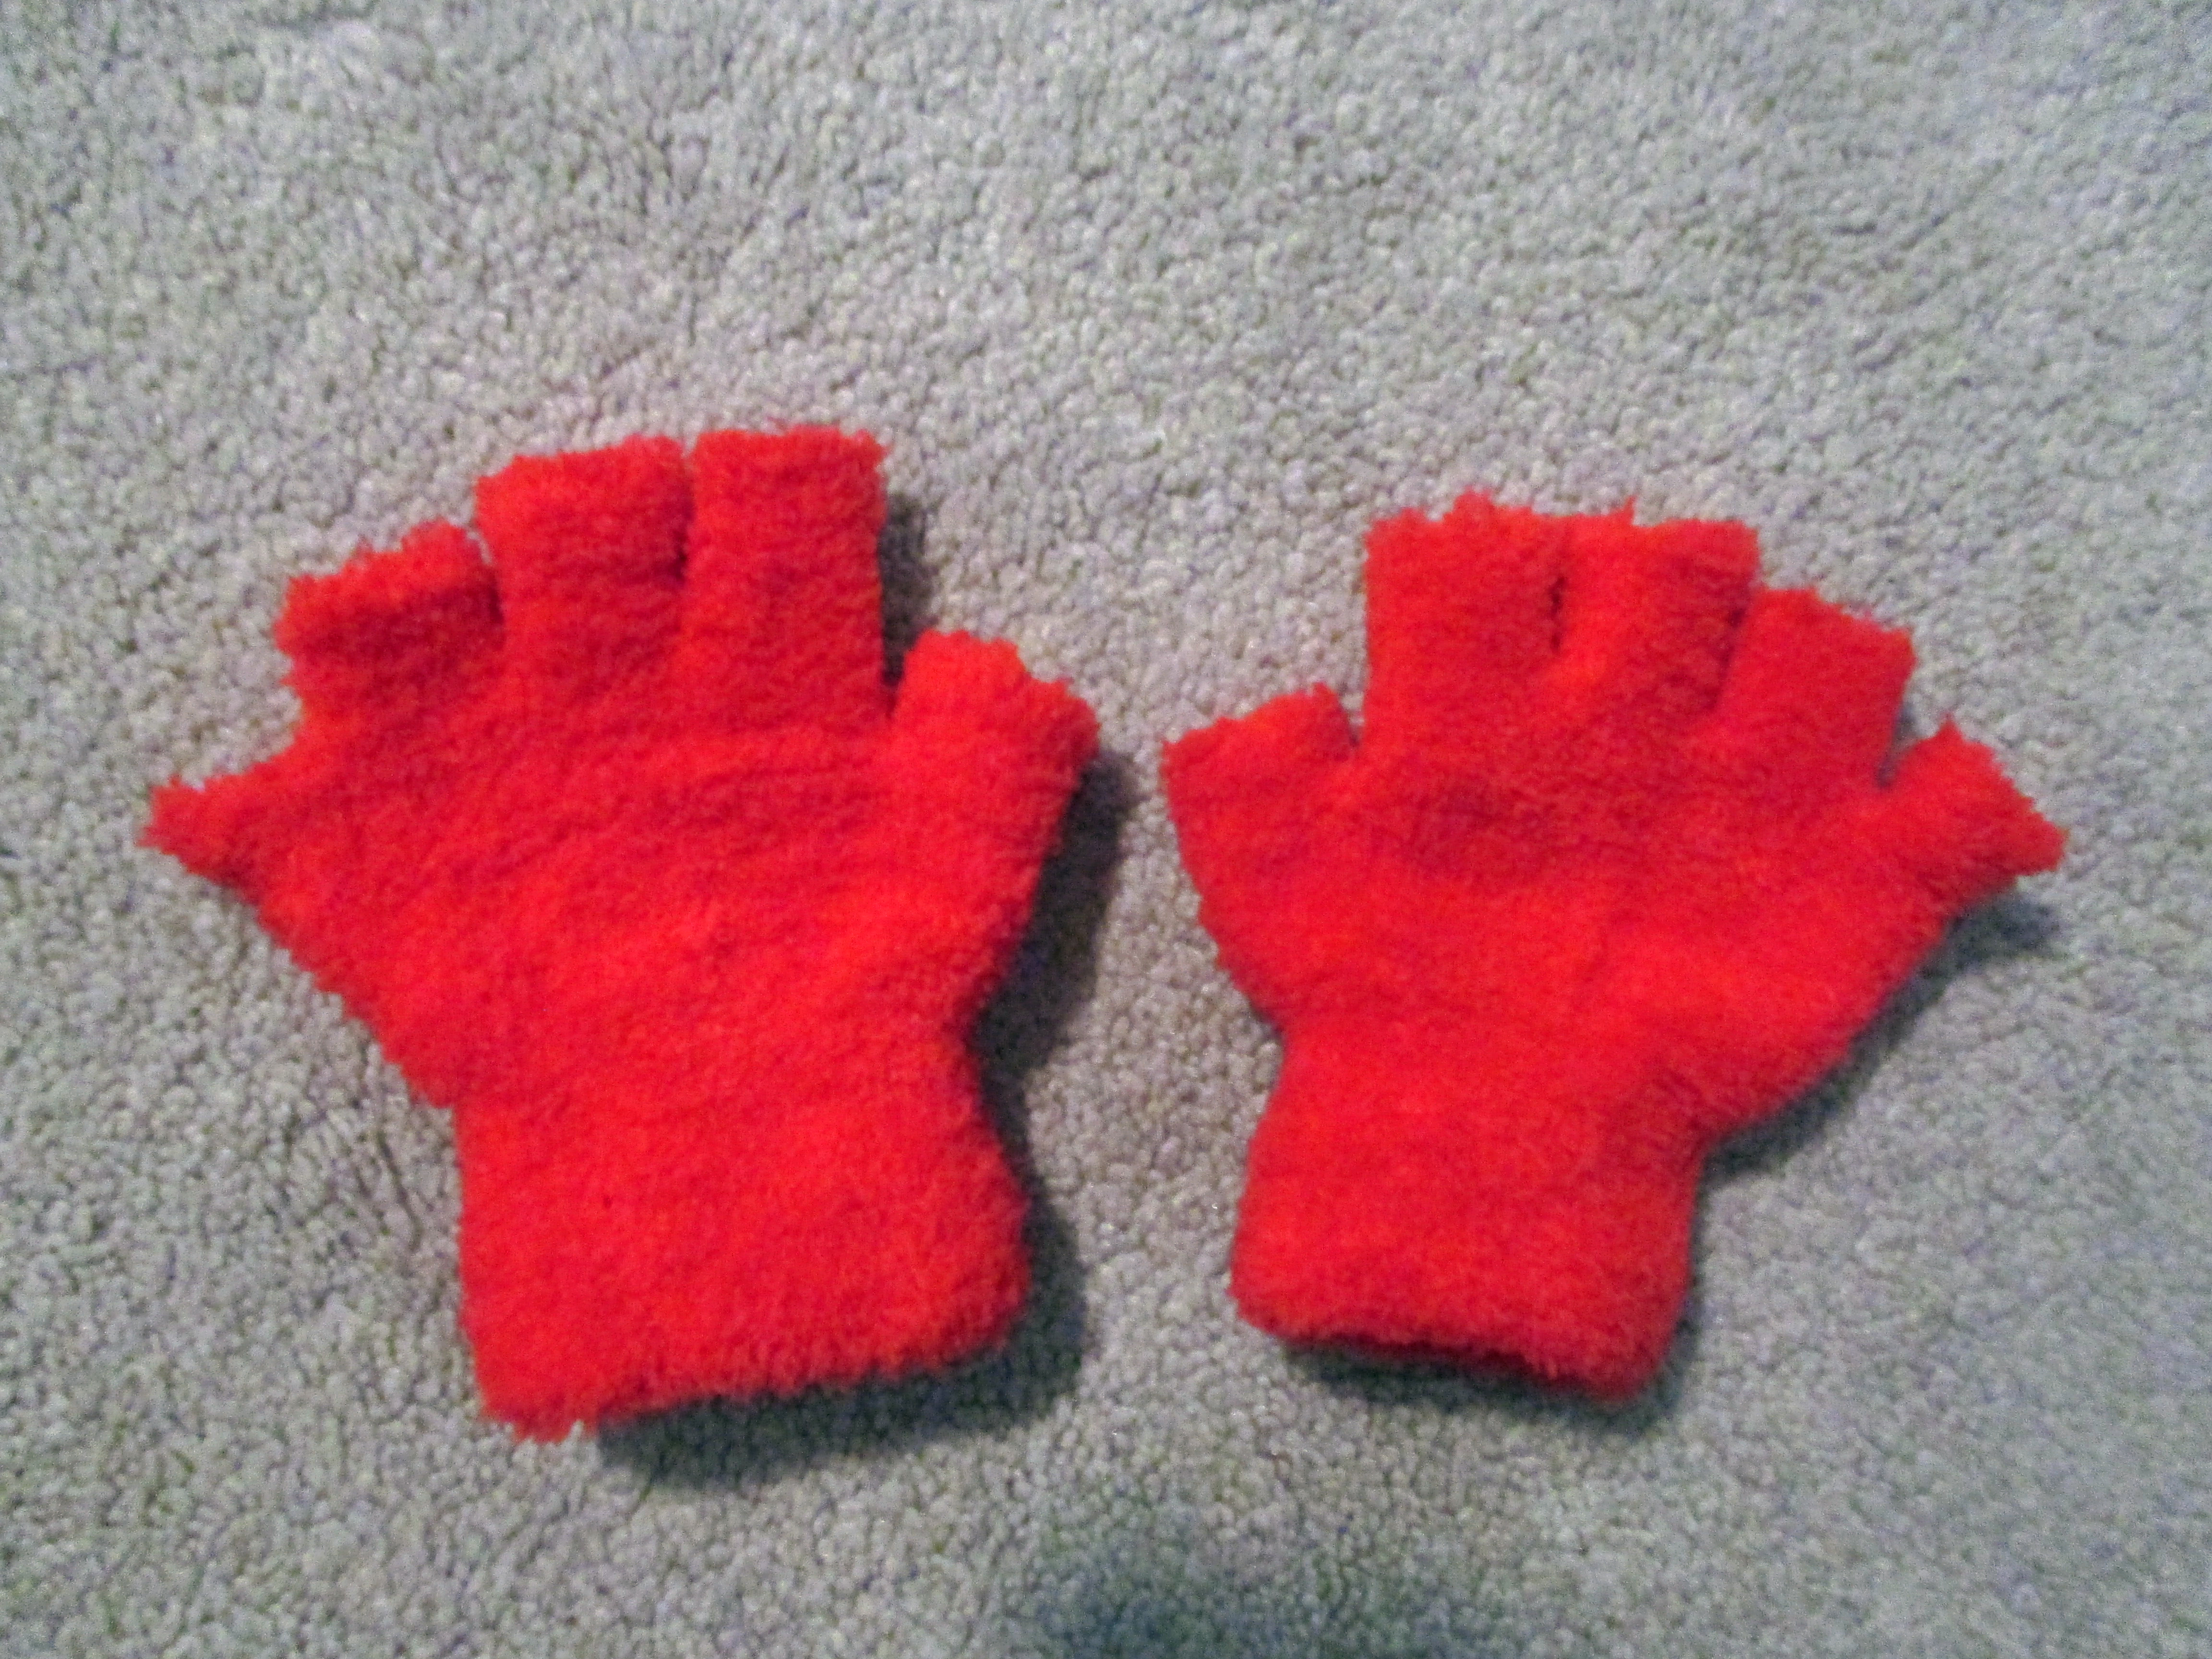 Scarlet Witch gloves